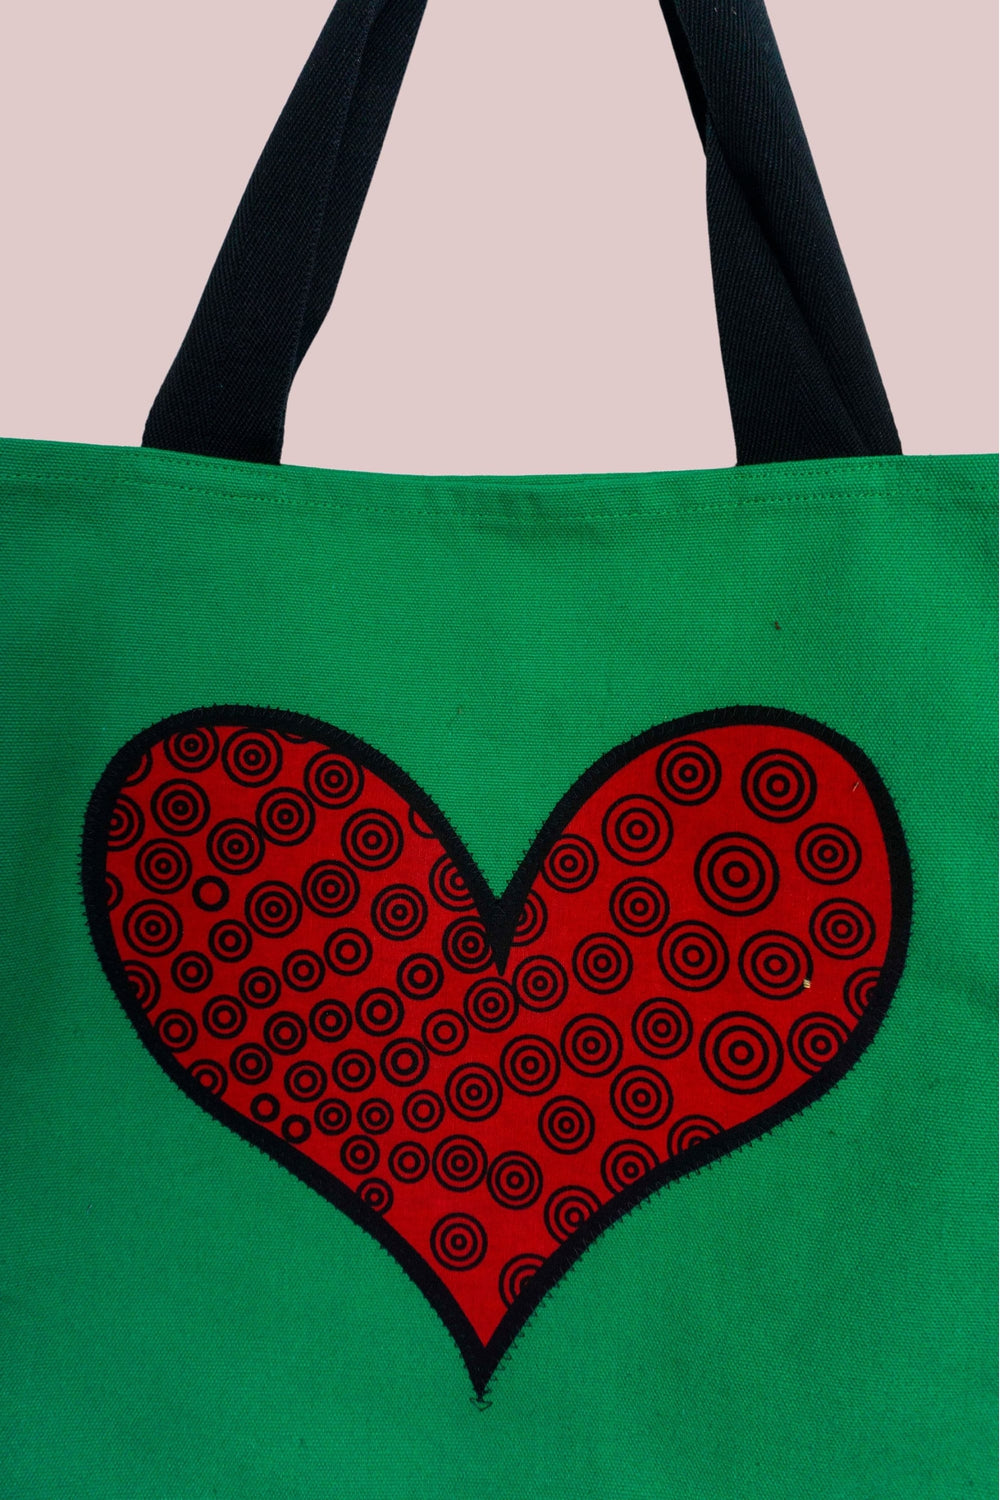 Love Ya Green Ankara Tote Bag